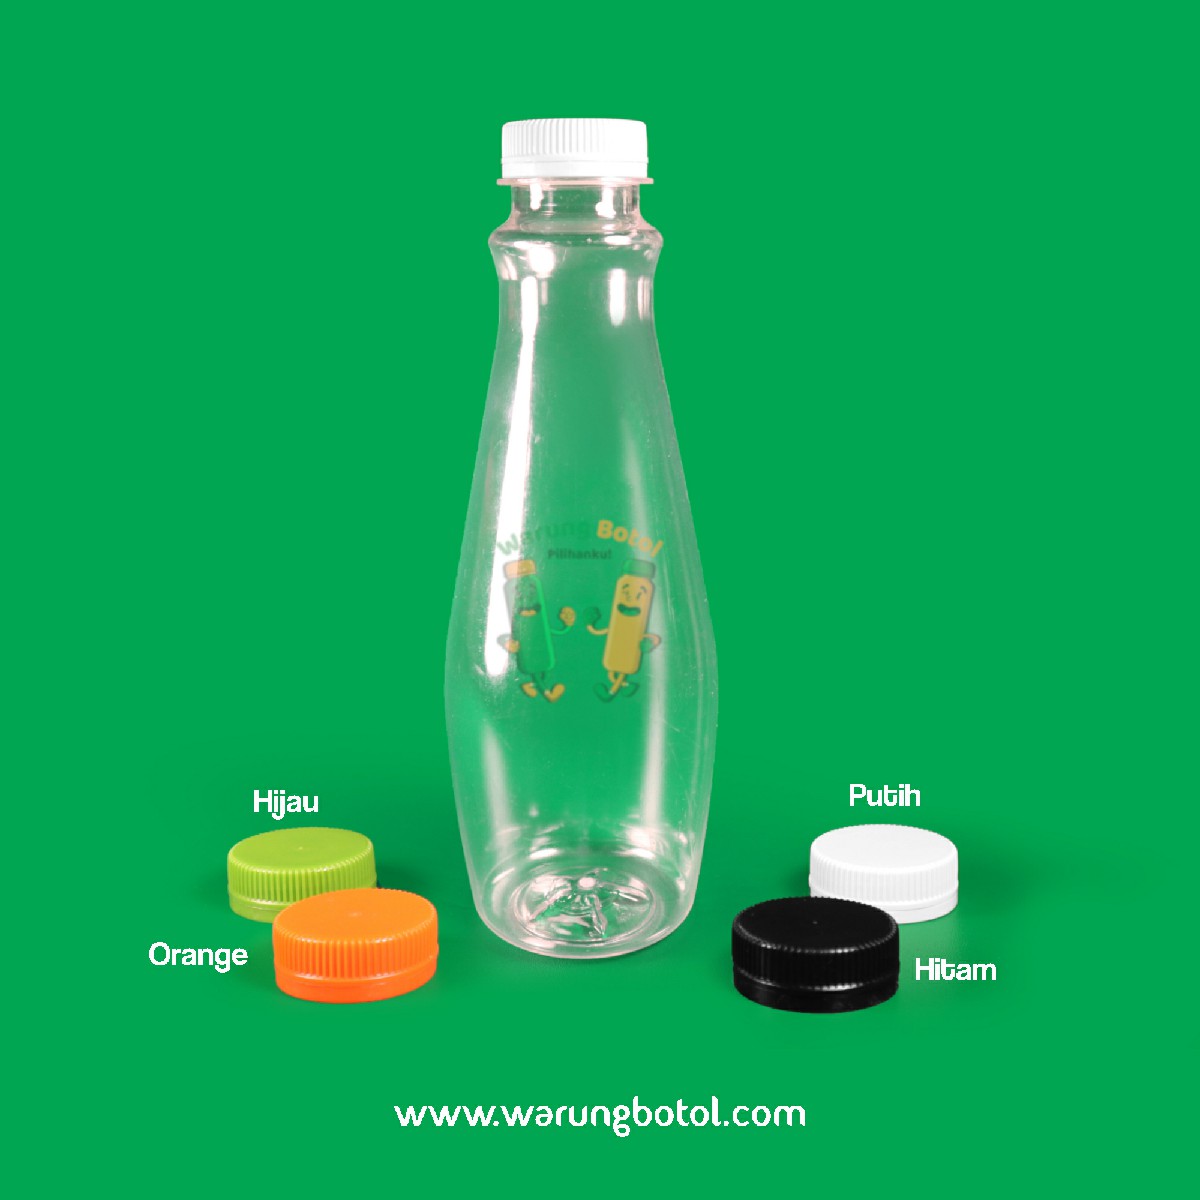 distributor toko jual botol plastik minuman unik 350ml bening murah terdekat bandung jakarta bogor bekasi